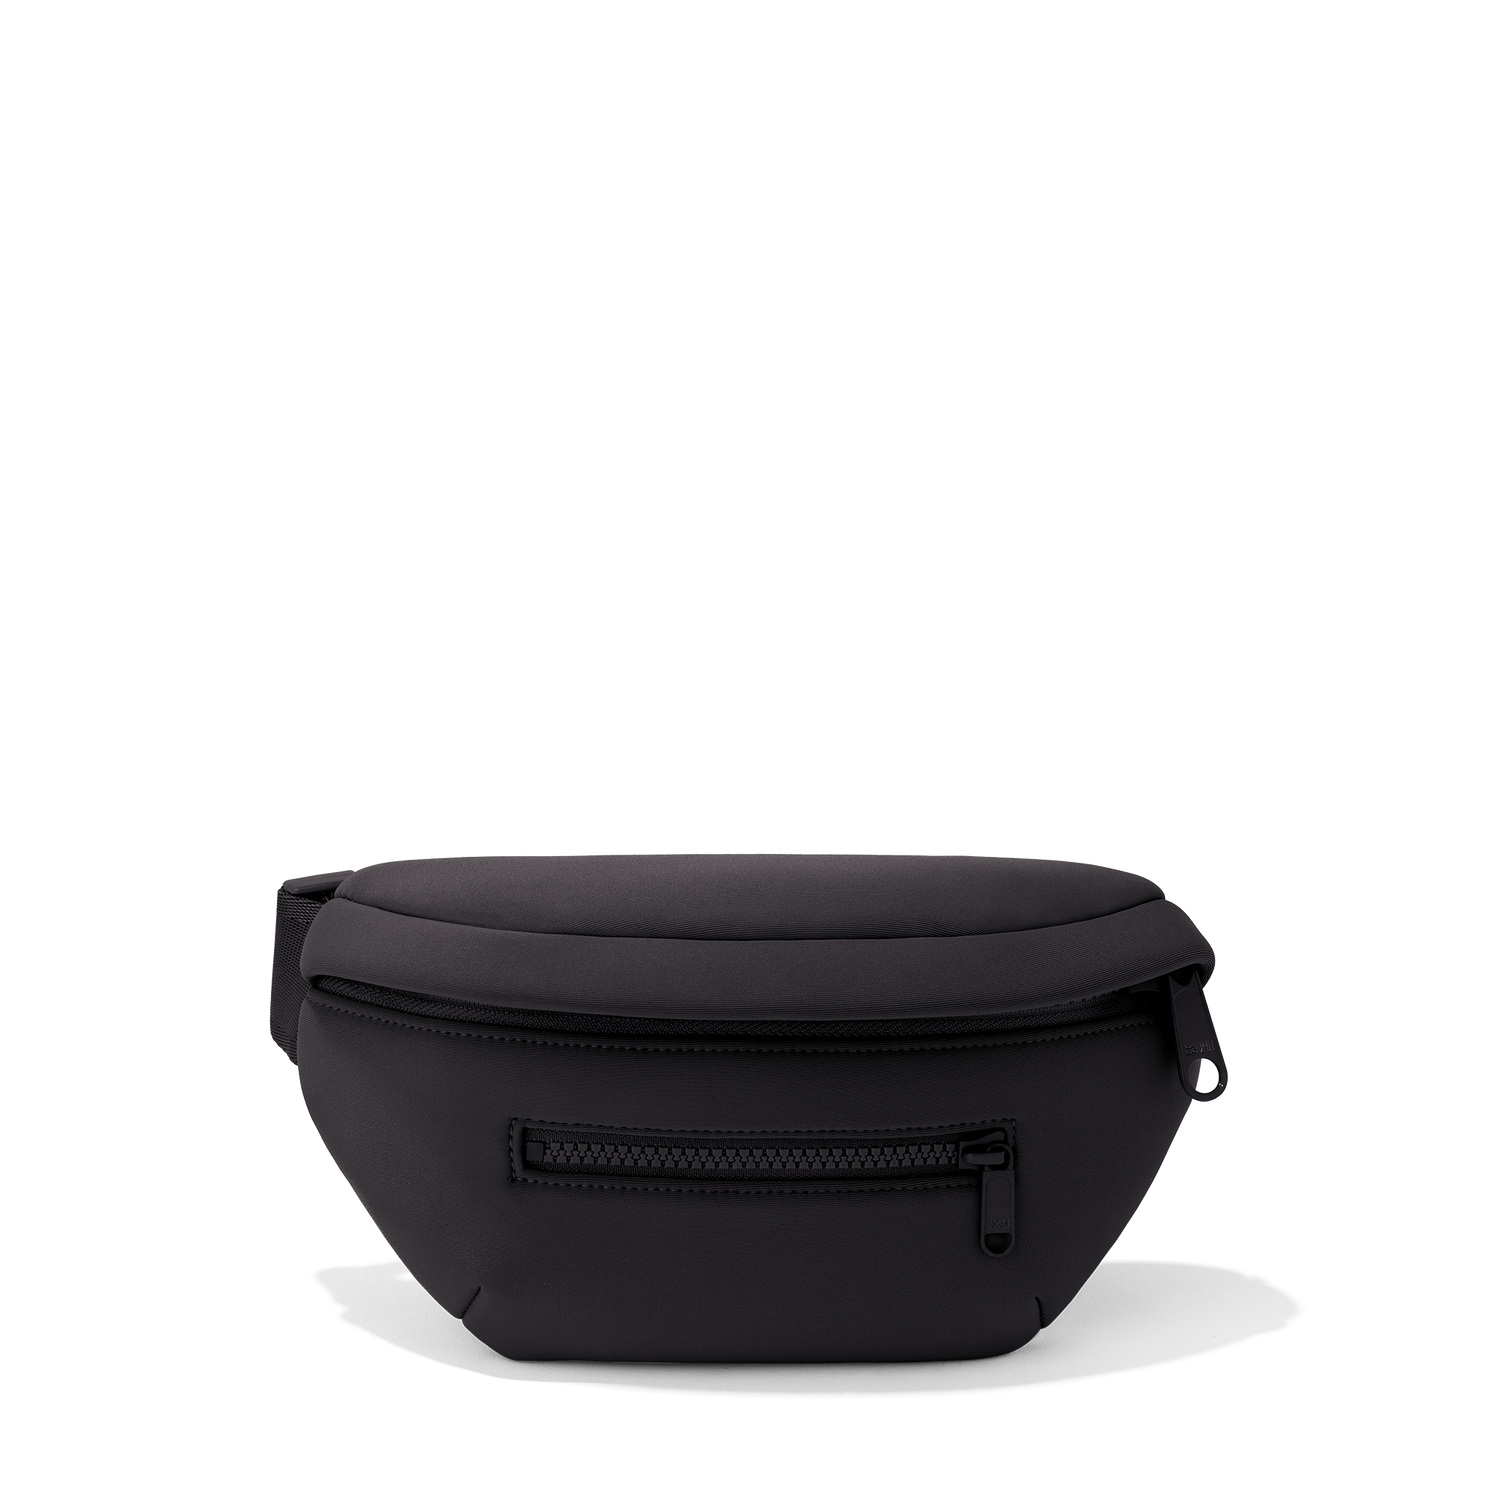 Bottega Veneta® Women's Key Pouch in Black. Shop online now.